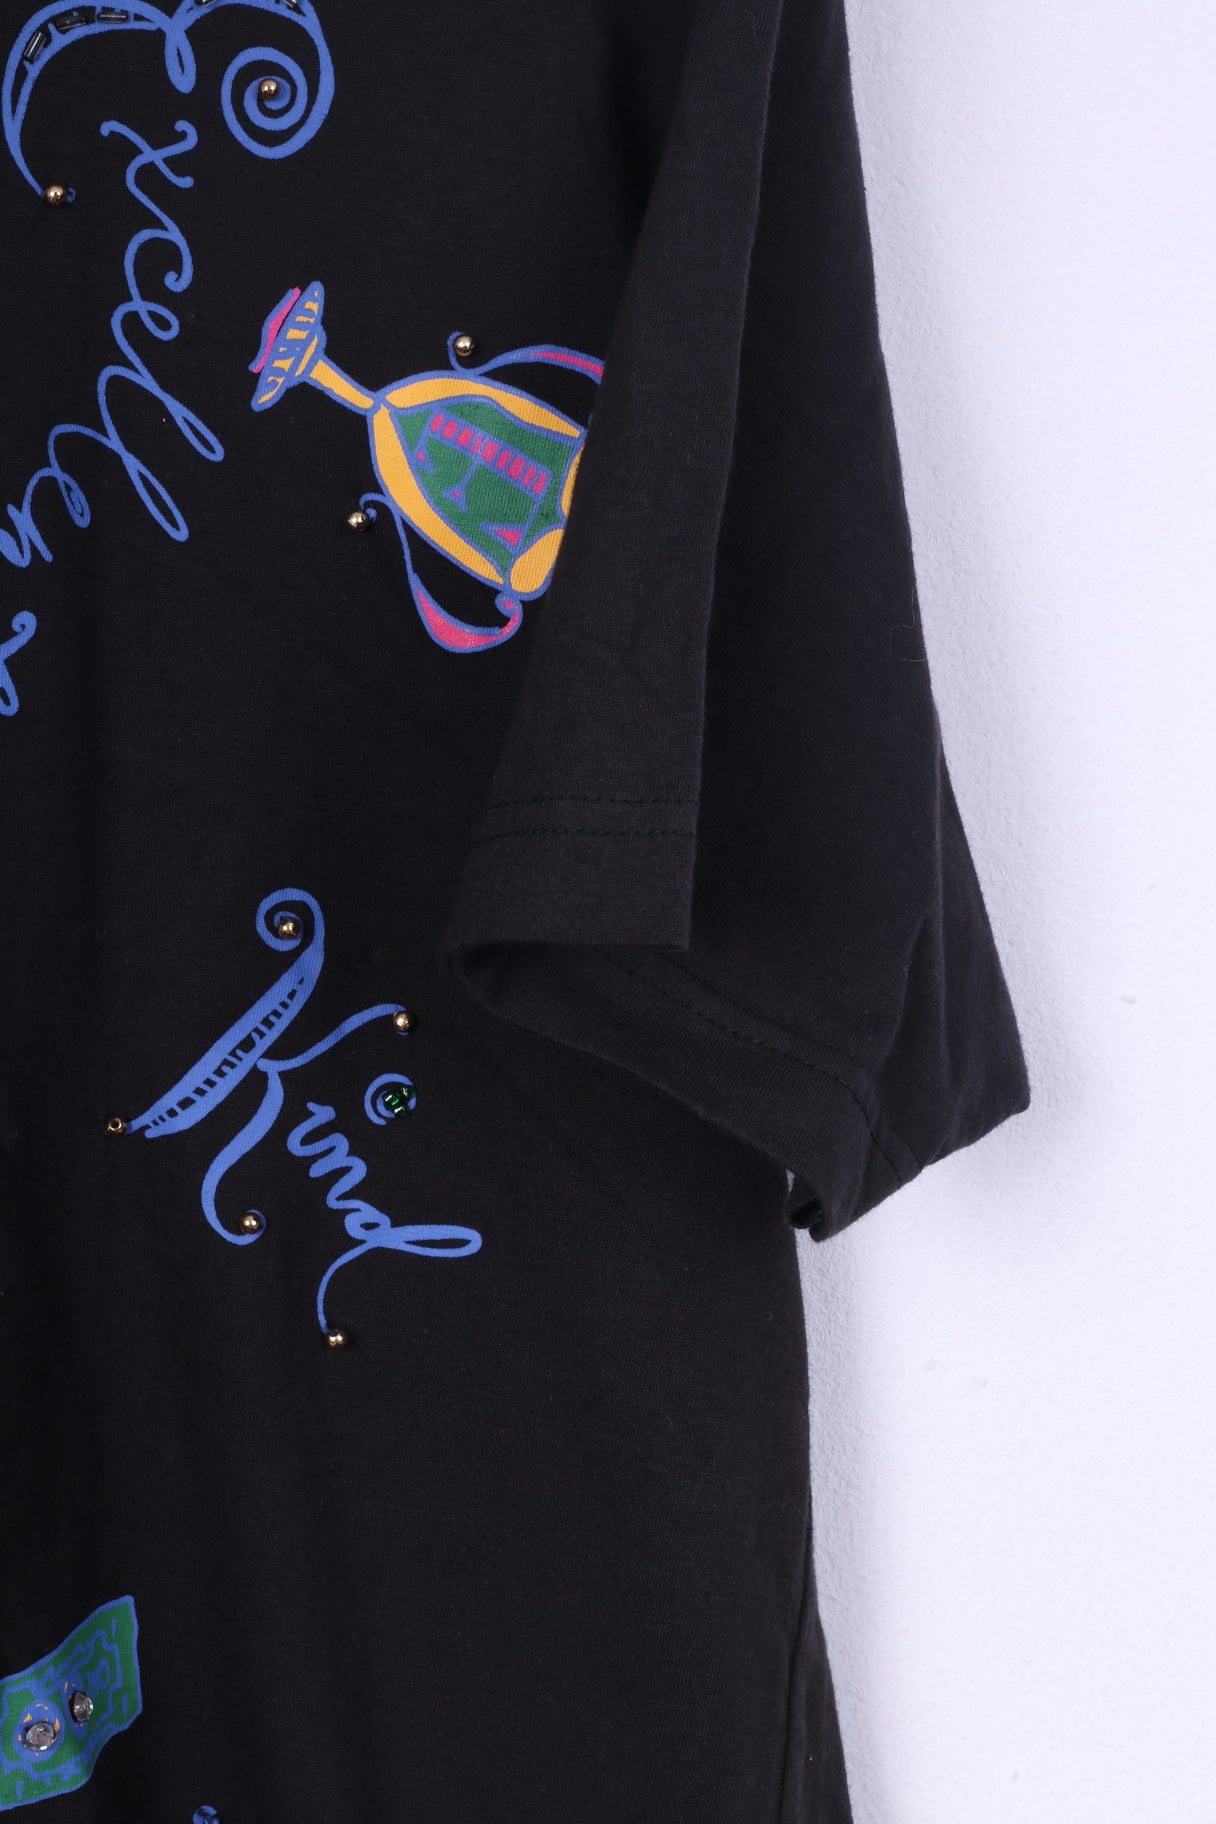 Tigi-Wear by Rinku Womens One Size T-Shirt Graphic Black Cotton Top